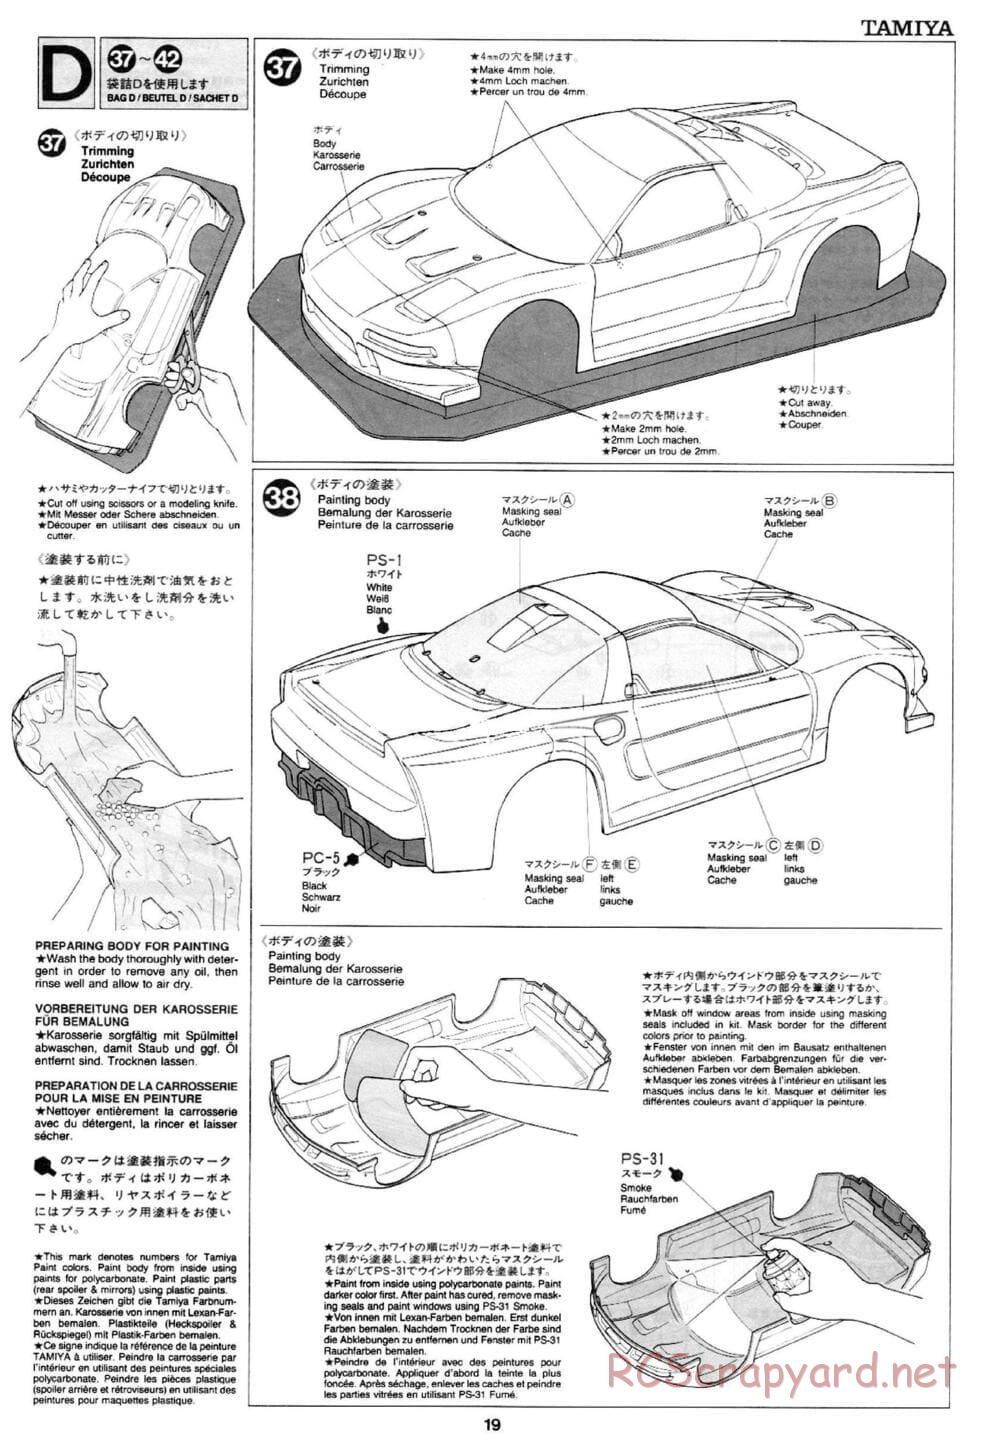 Tamiya - Mobil 1 NSX - TA-03R Chassis - Manual - Page 19